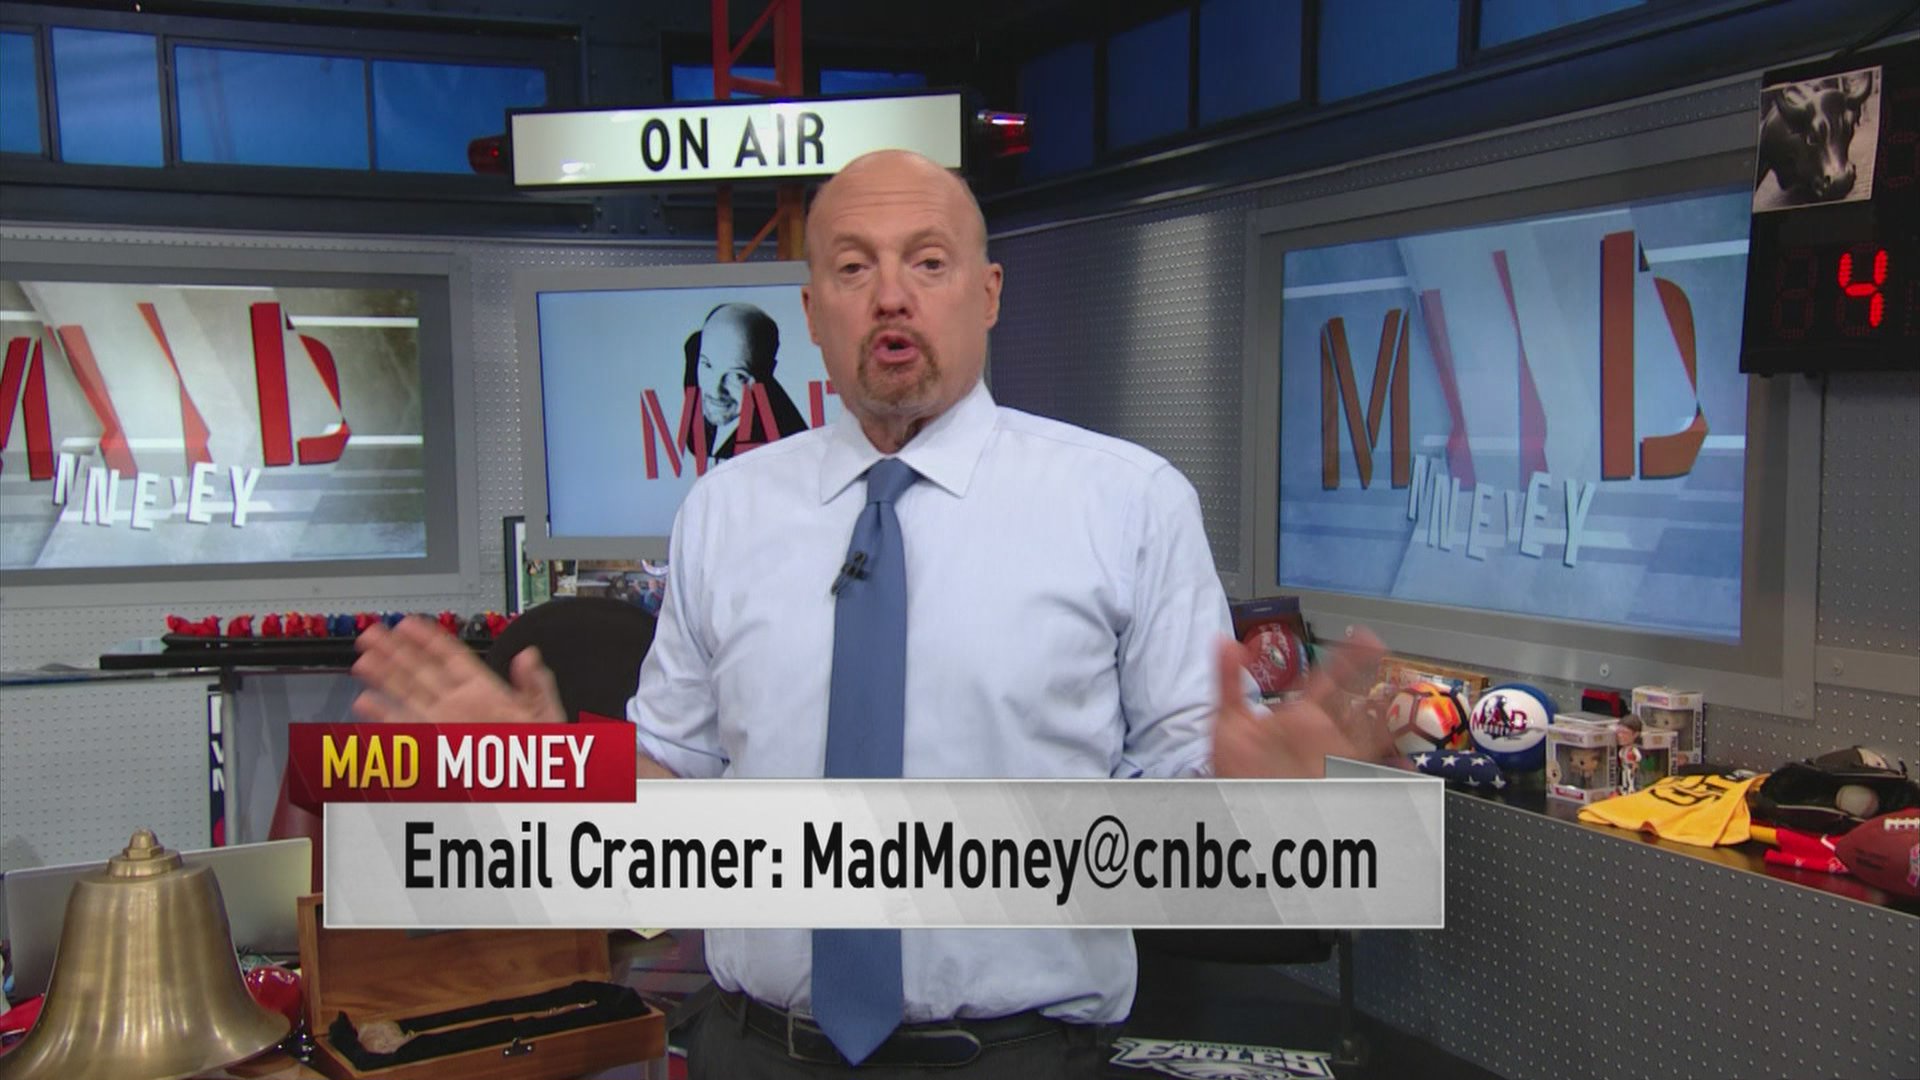 Watch Mad Money Episode: Mad Money - June 3, 2020 - NBC.com